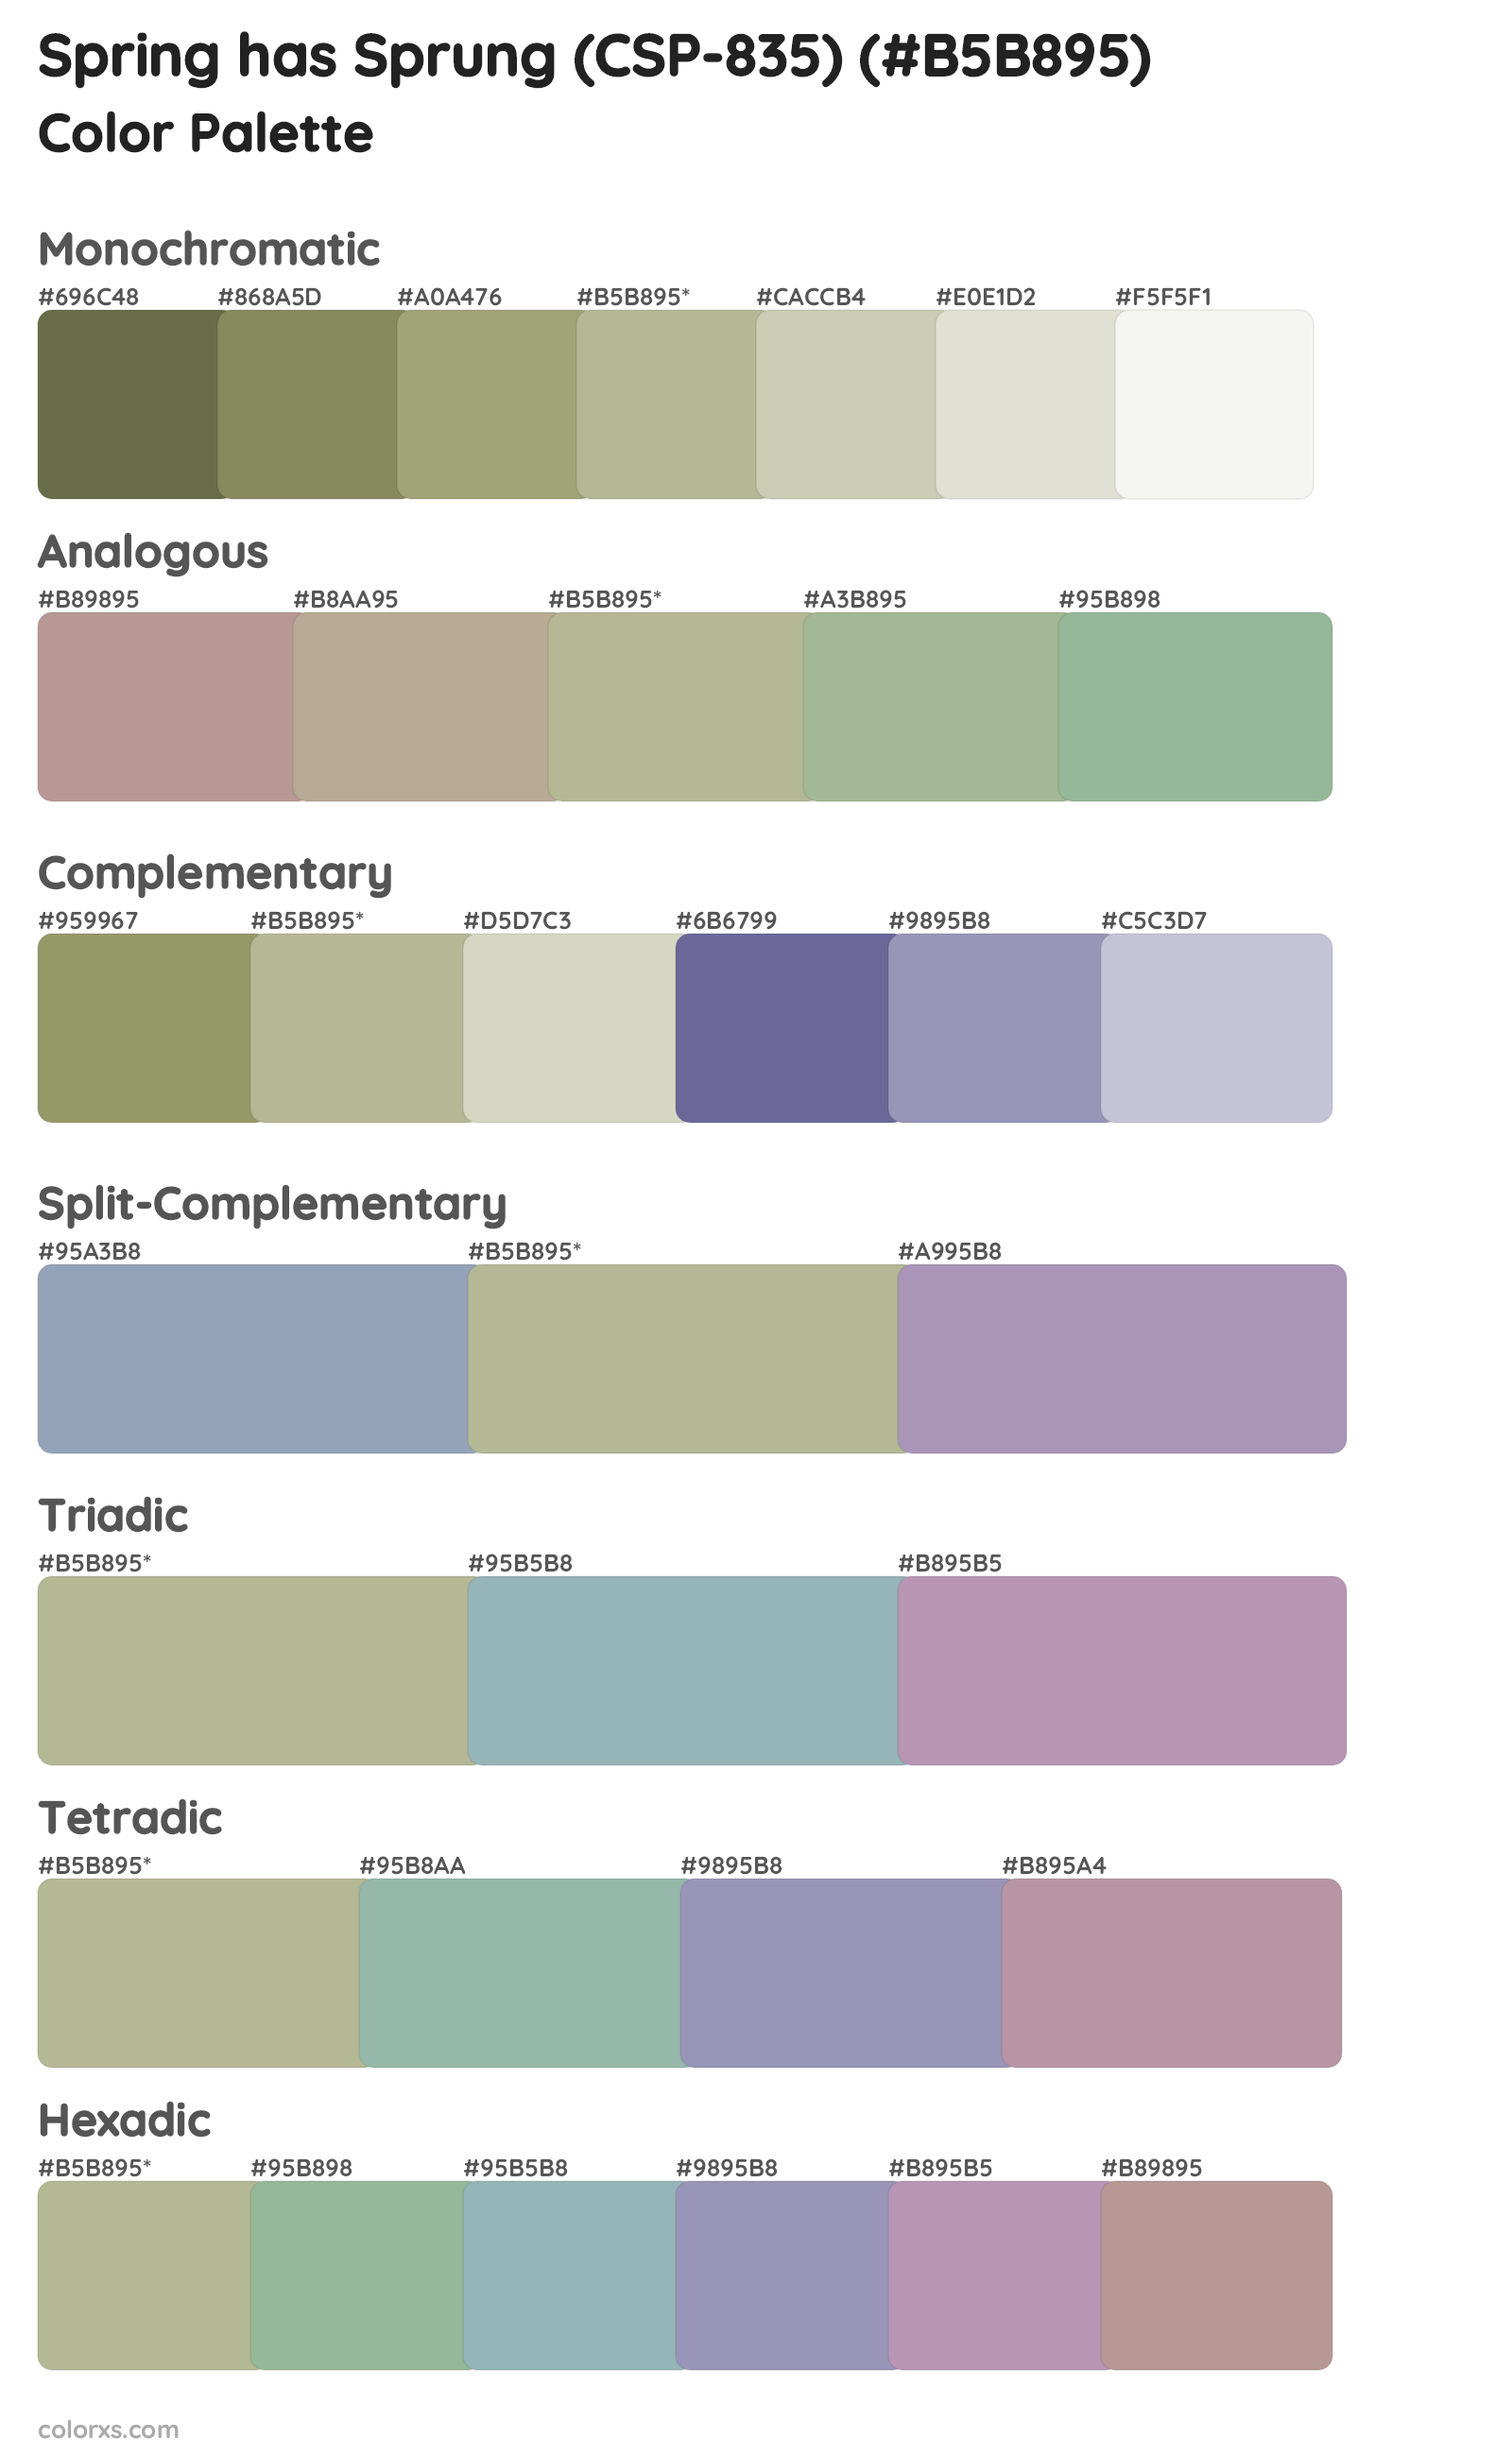 Spring has Sprung (CSP-835) Color Scheme Palettes